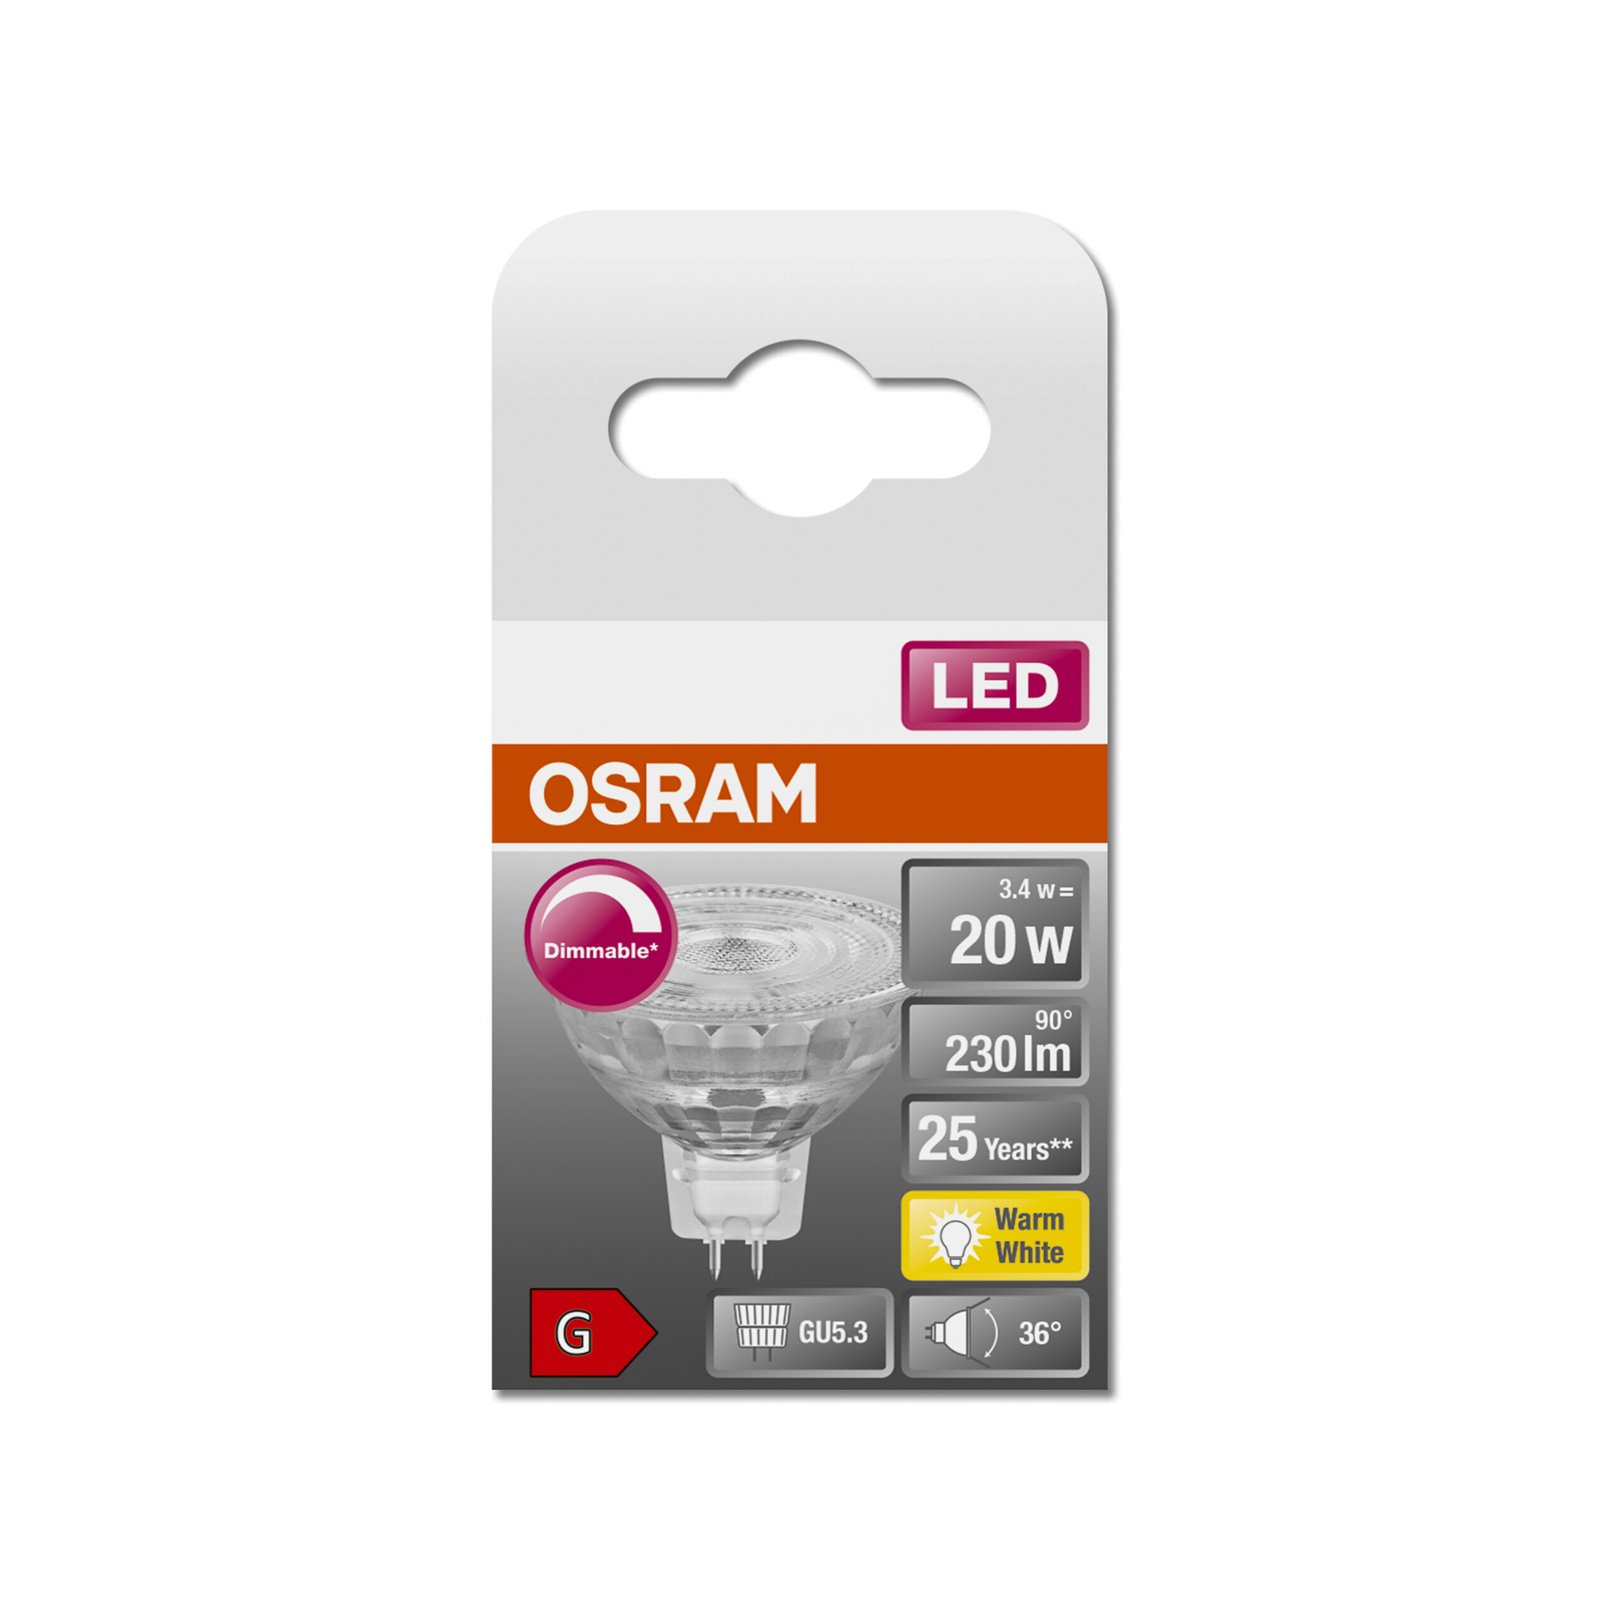 OSRAM LED reflektor izzó GU5.3 3,4 W 927 36° szab